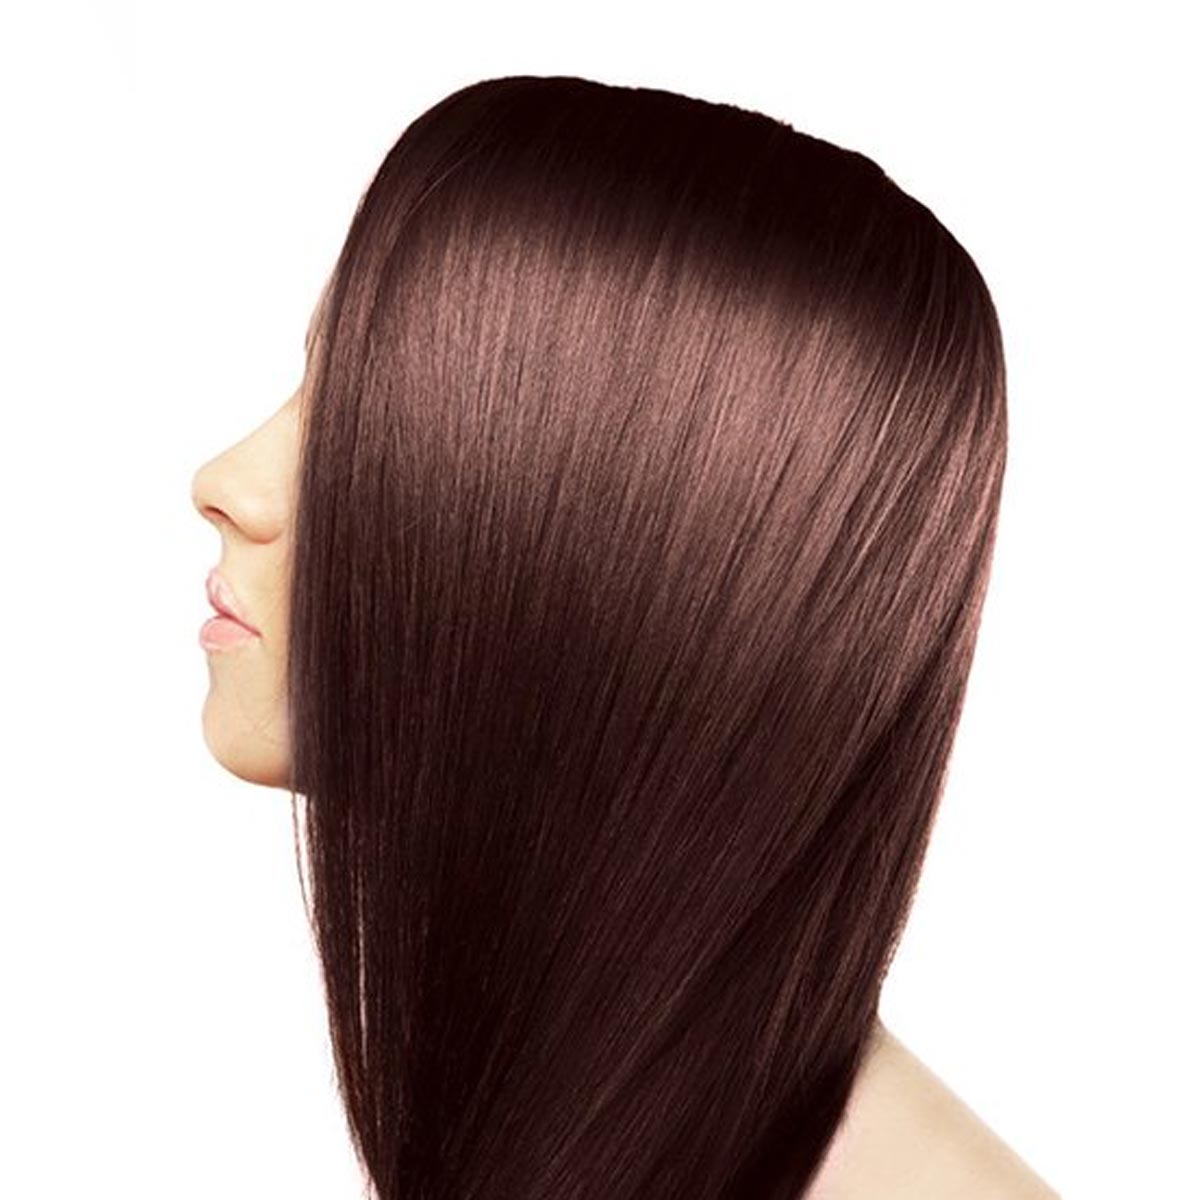 Alternate image of Chocolate Henna Hair Color